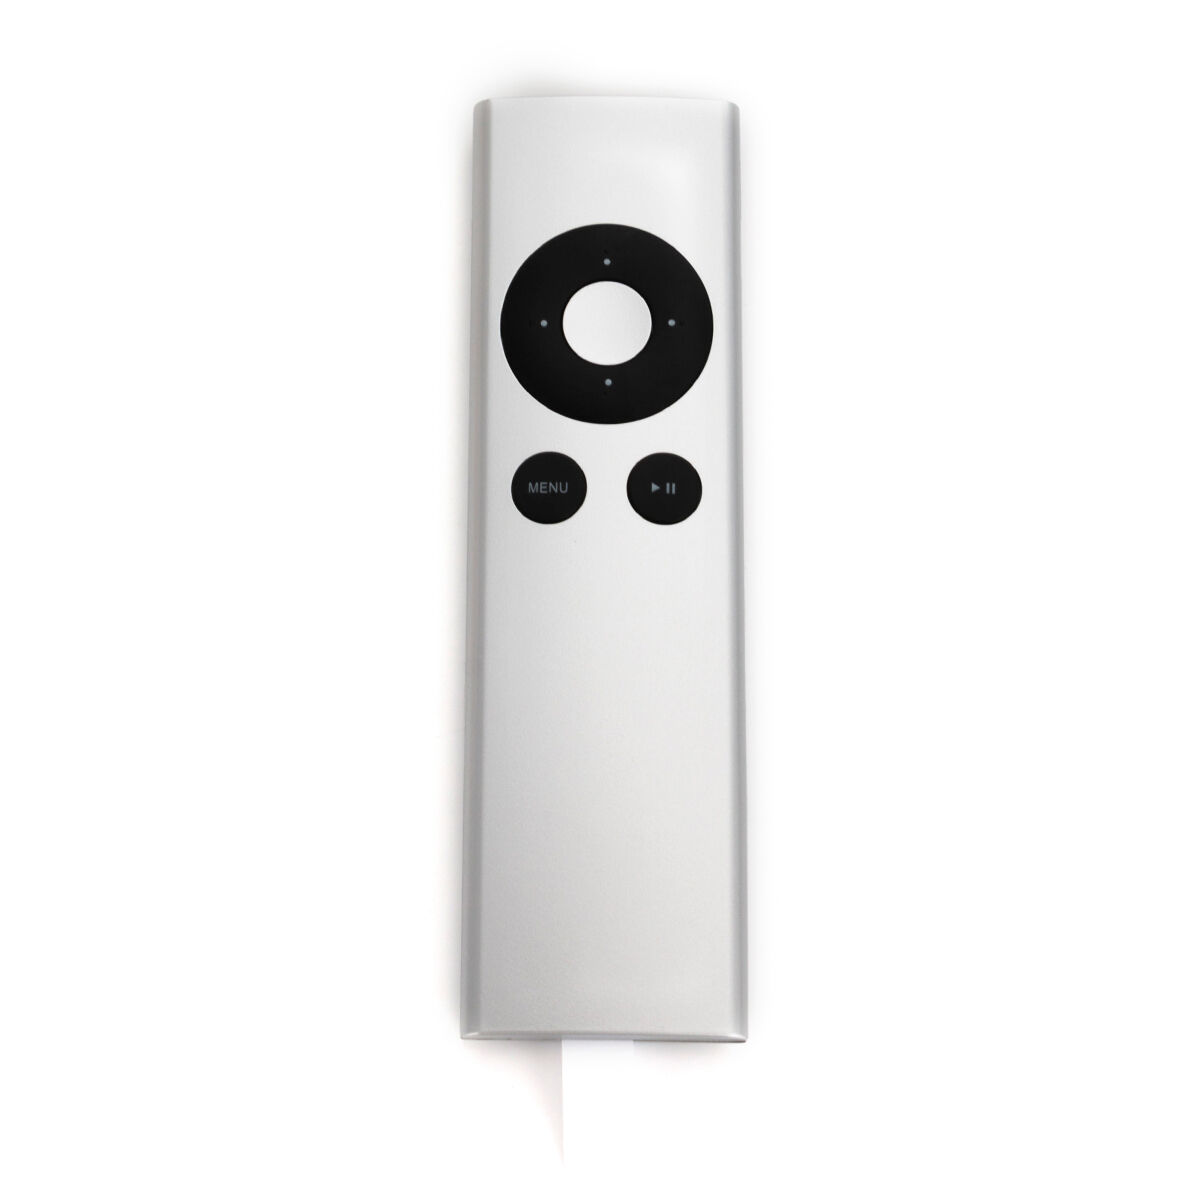 NEW Universal Remote Control MC377LL/A For Apple TV 2 3 Music System Mac mc377ll Unbranded white-apl - фотография #2